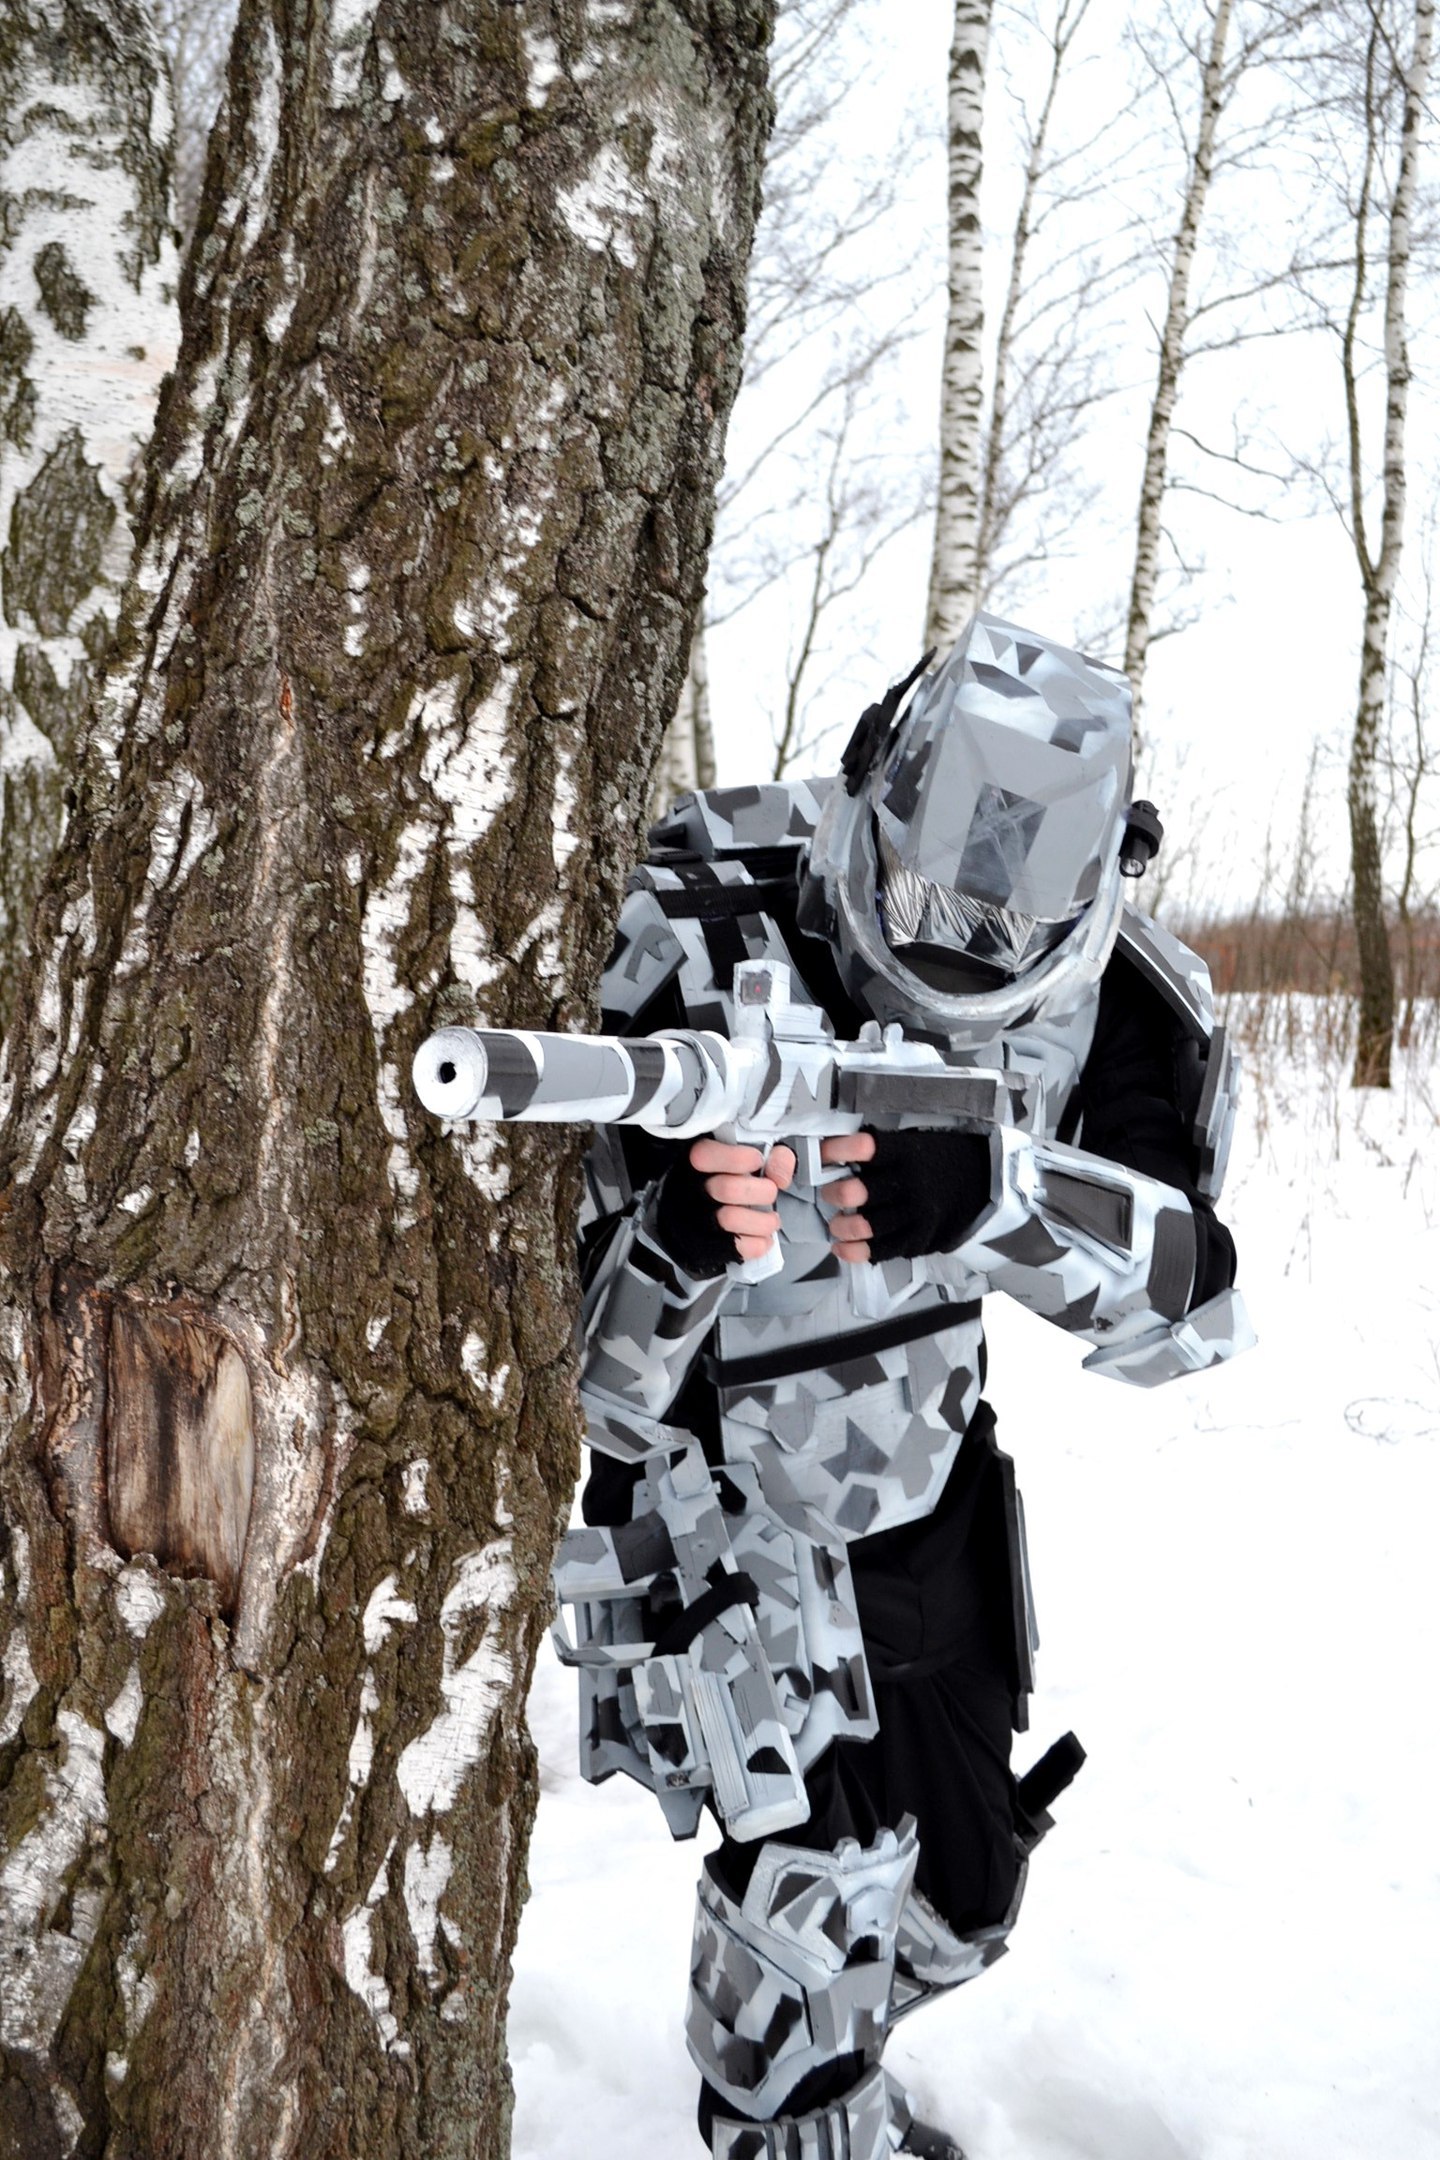 ODST Winter Assault Squad photoshoot